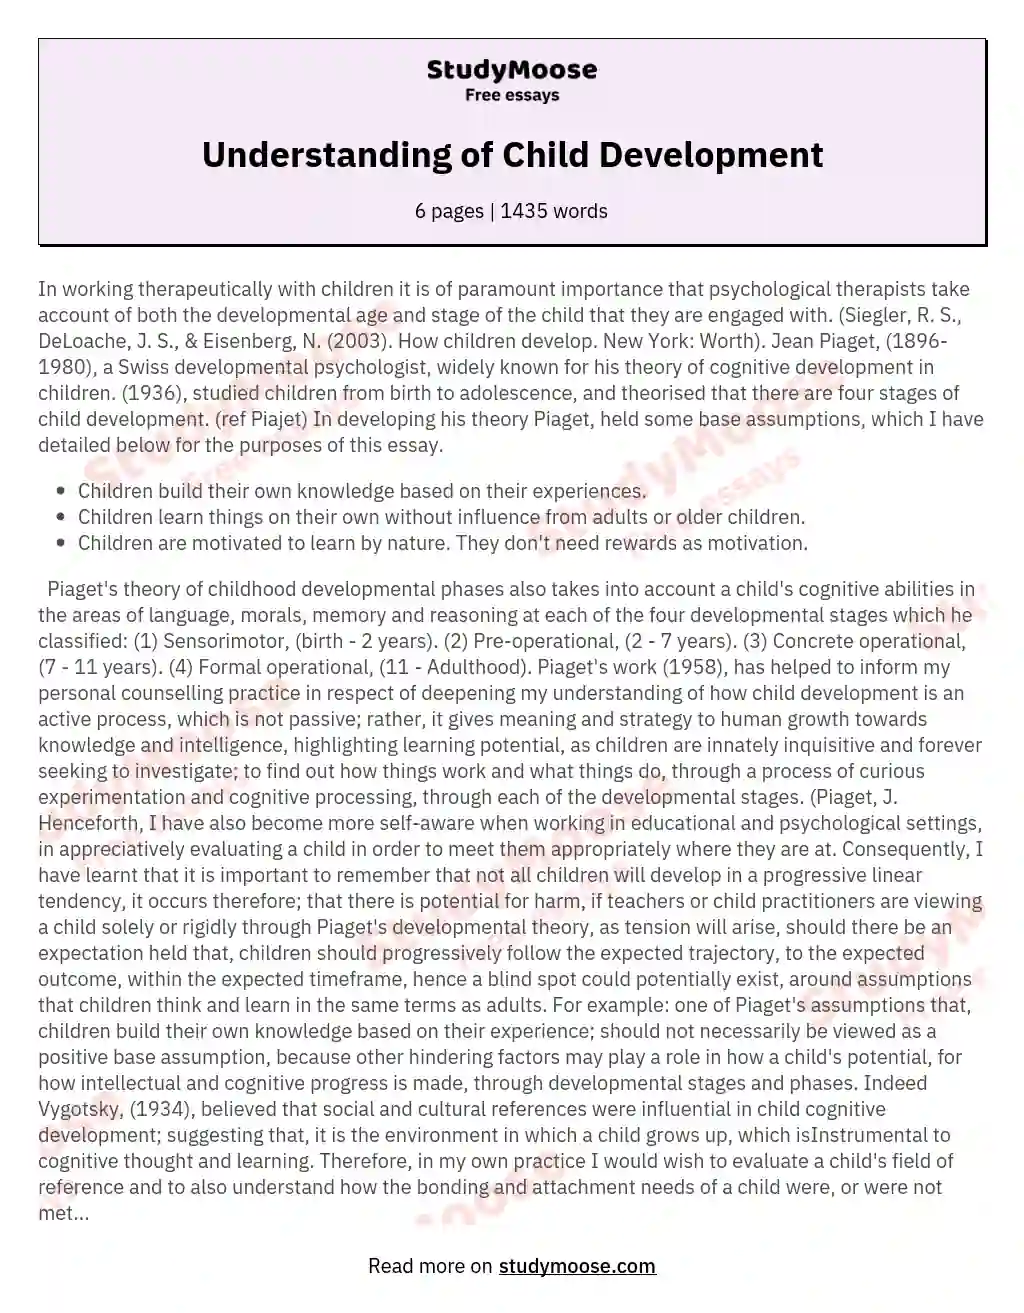 Understanding of Child Development essay